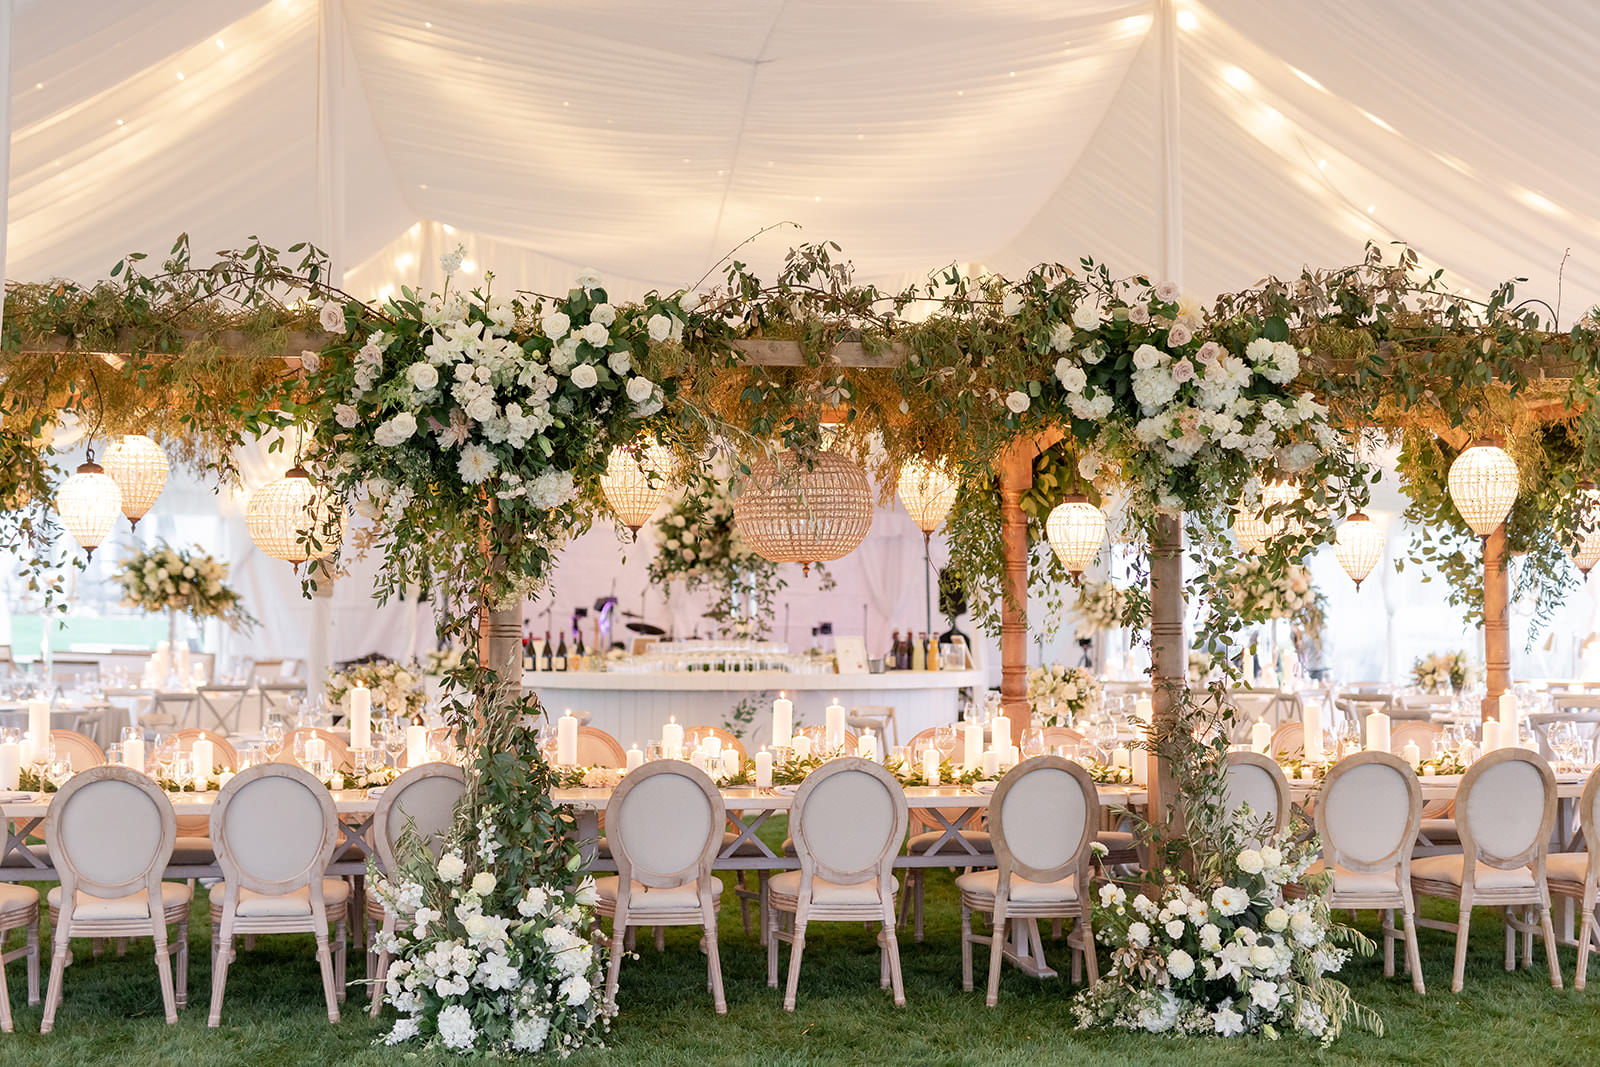 frontier-flowers-fontana-tented-wedding-reception